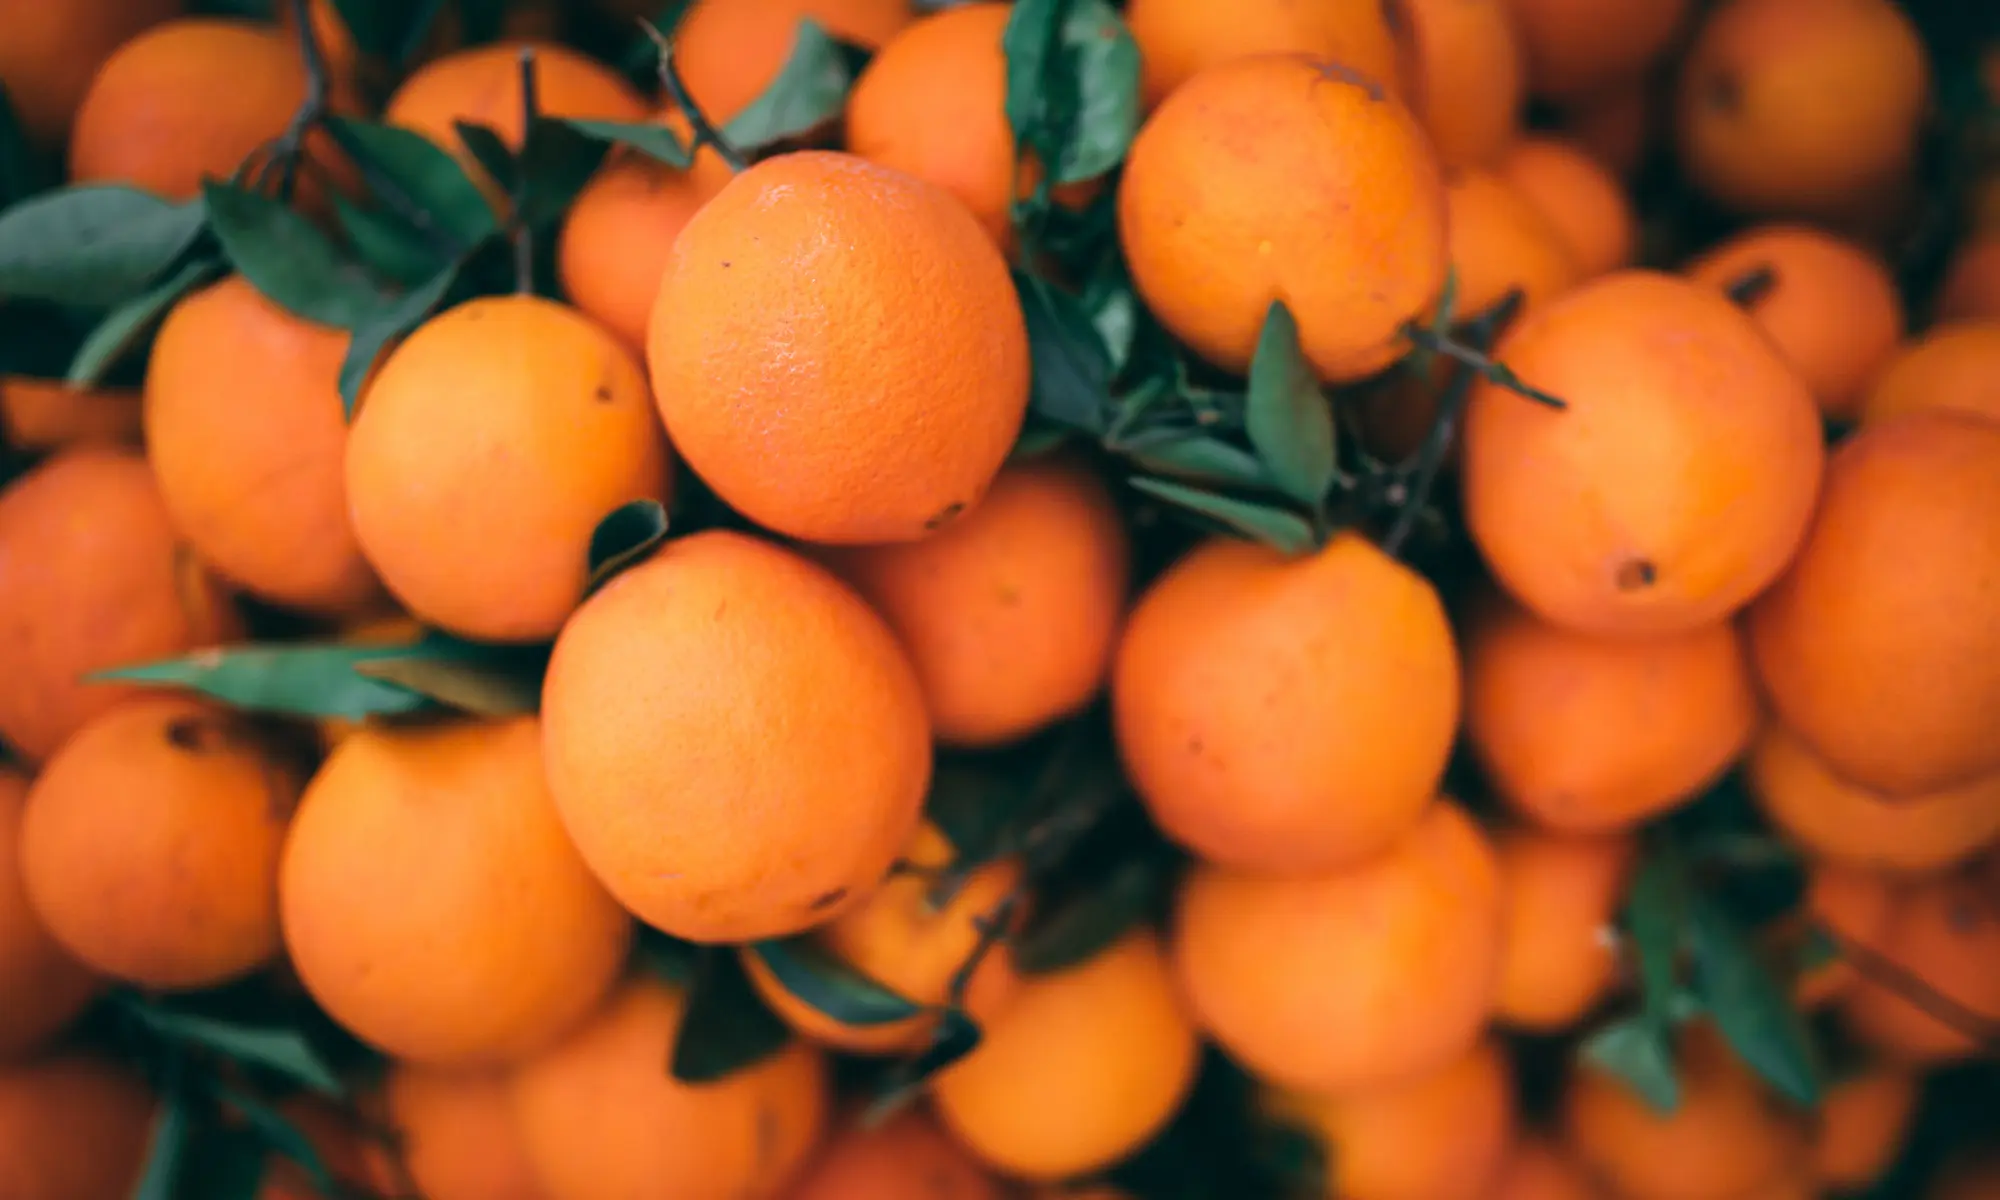 Orange fruits under selective focus photography.